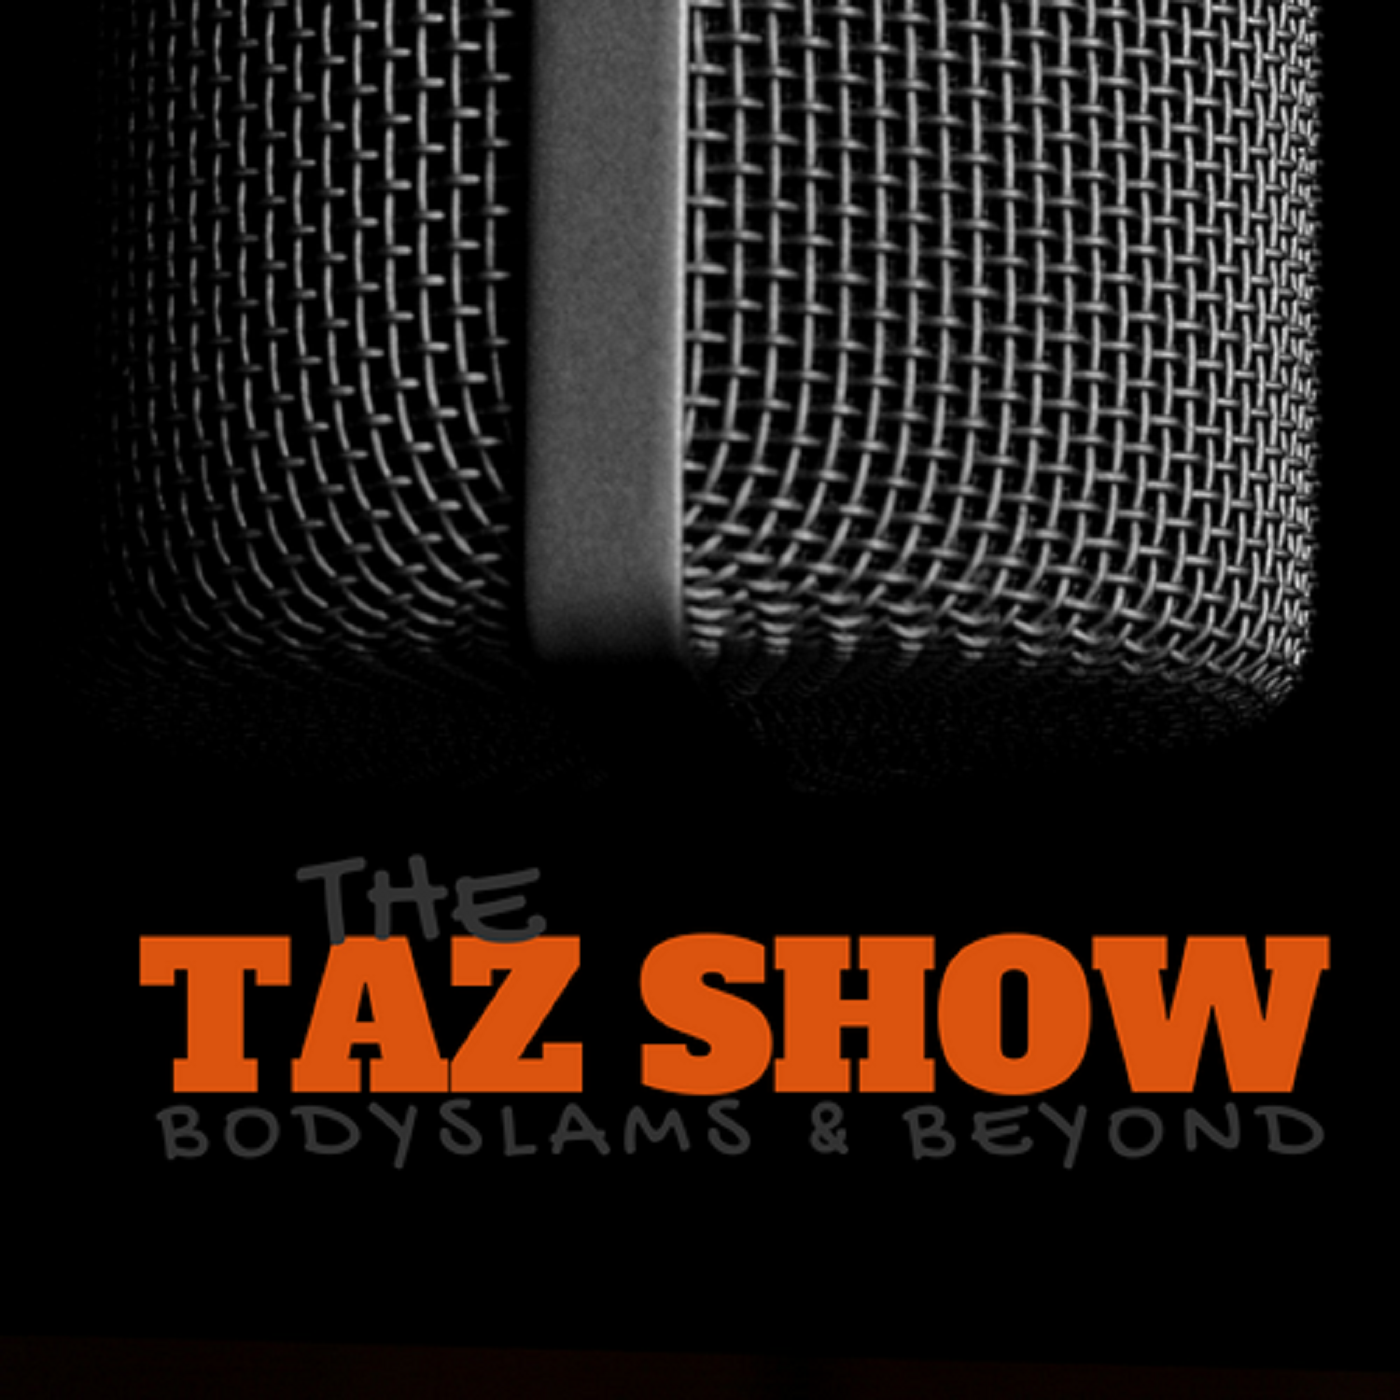 The Taz Show! Thursday, October 15th, 2015